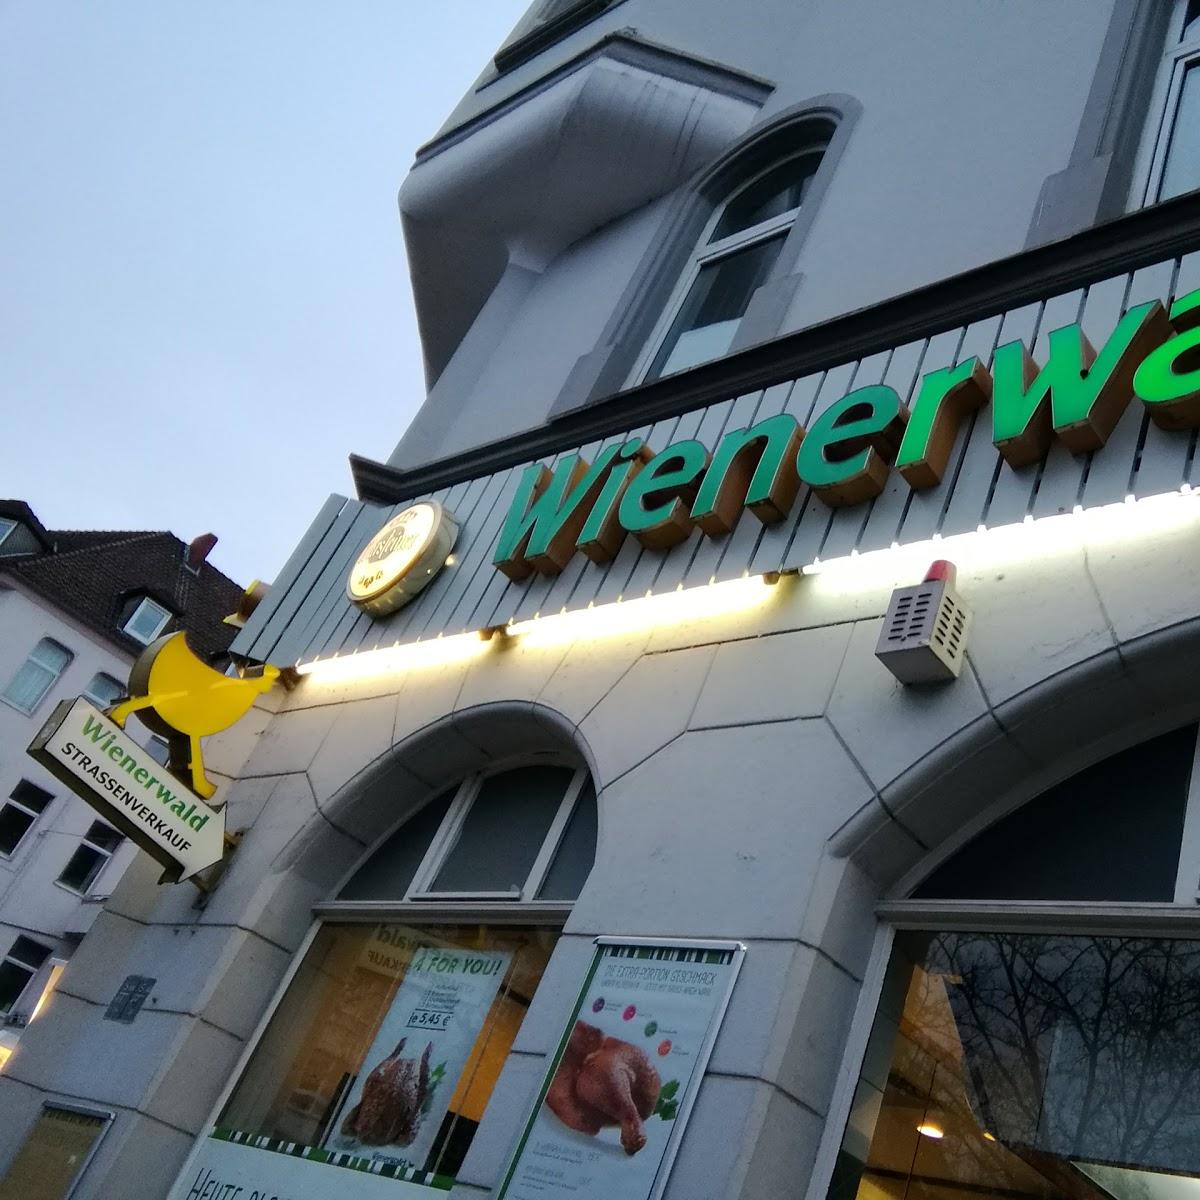 Restaurant "Wienerwald Hannover" in Hannover